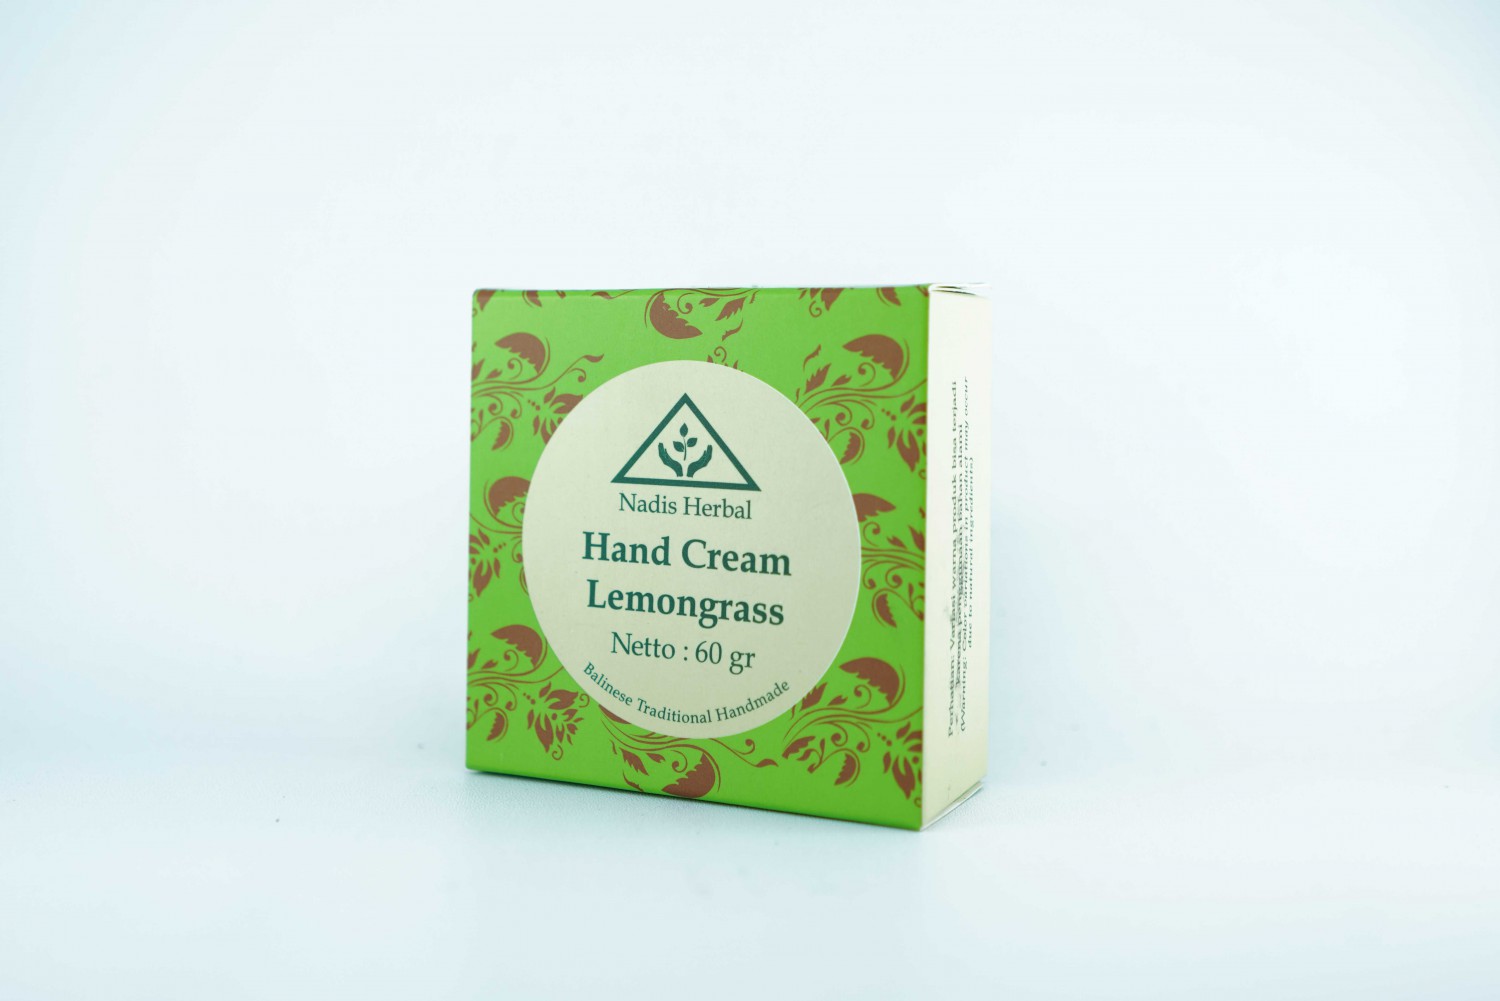 Hand Cream Lemongrass